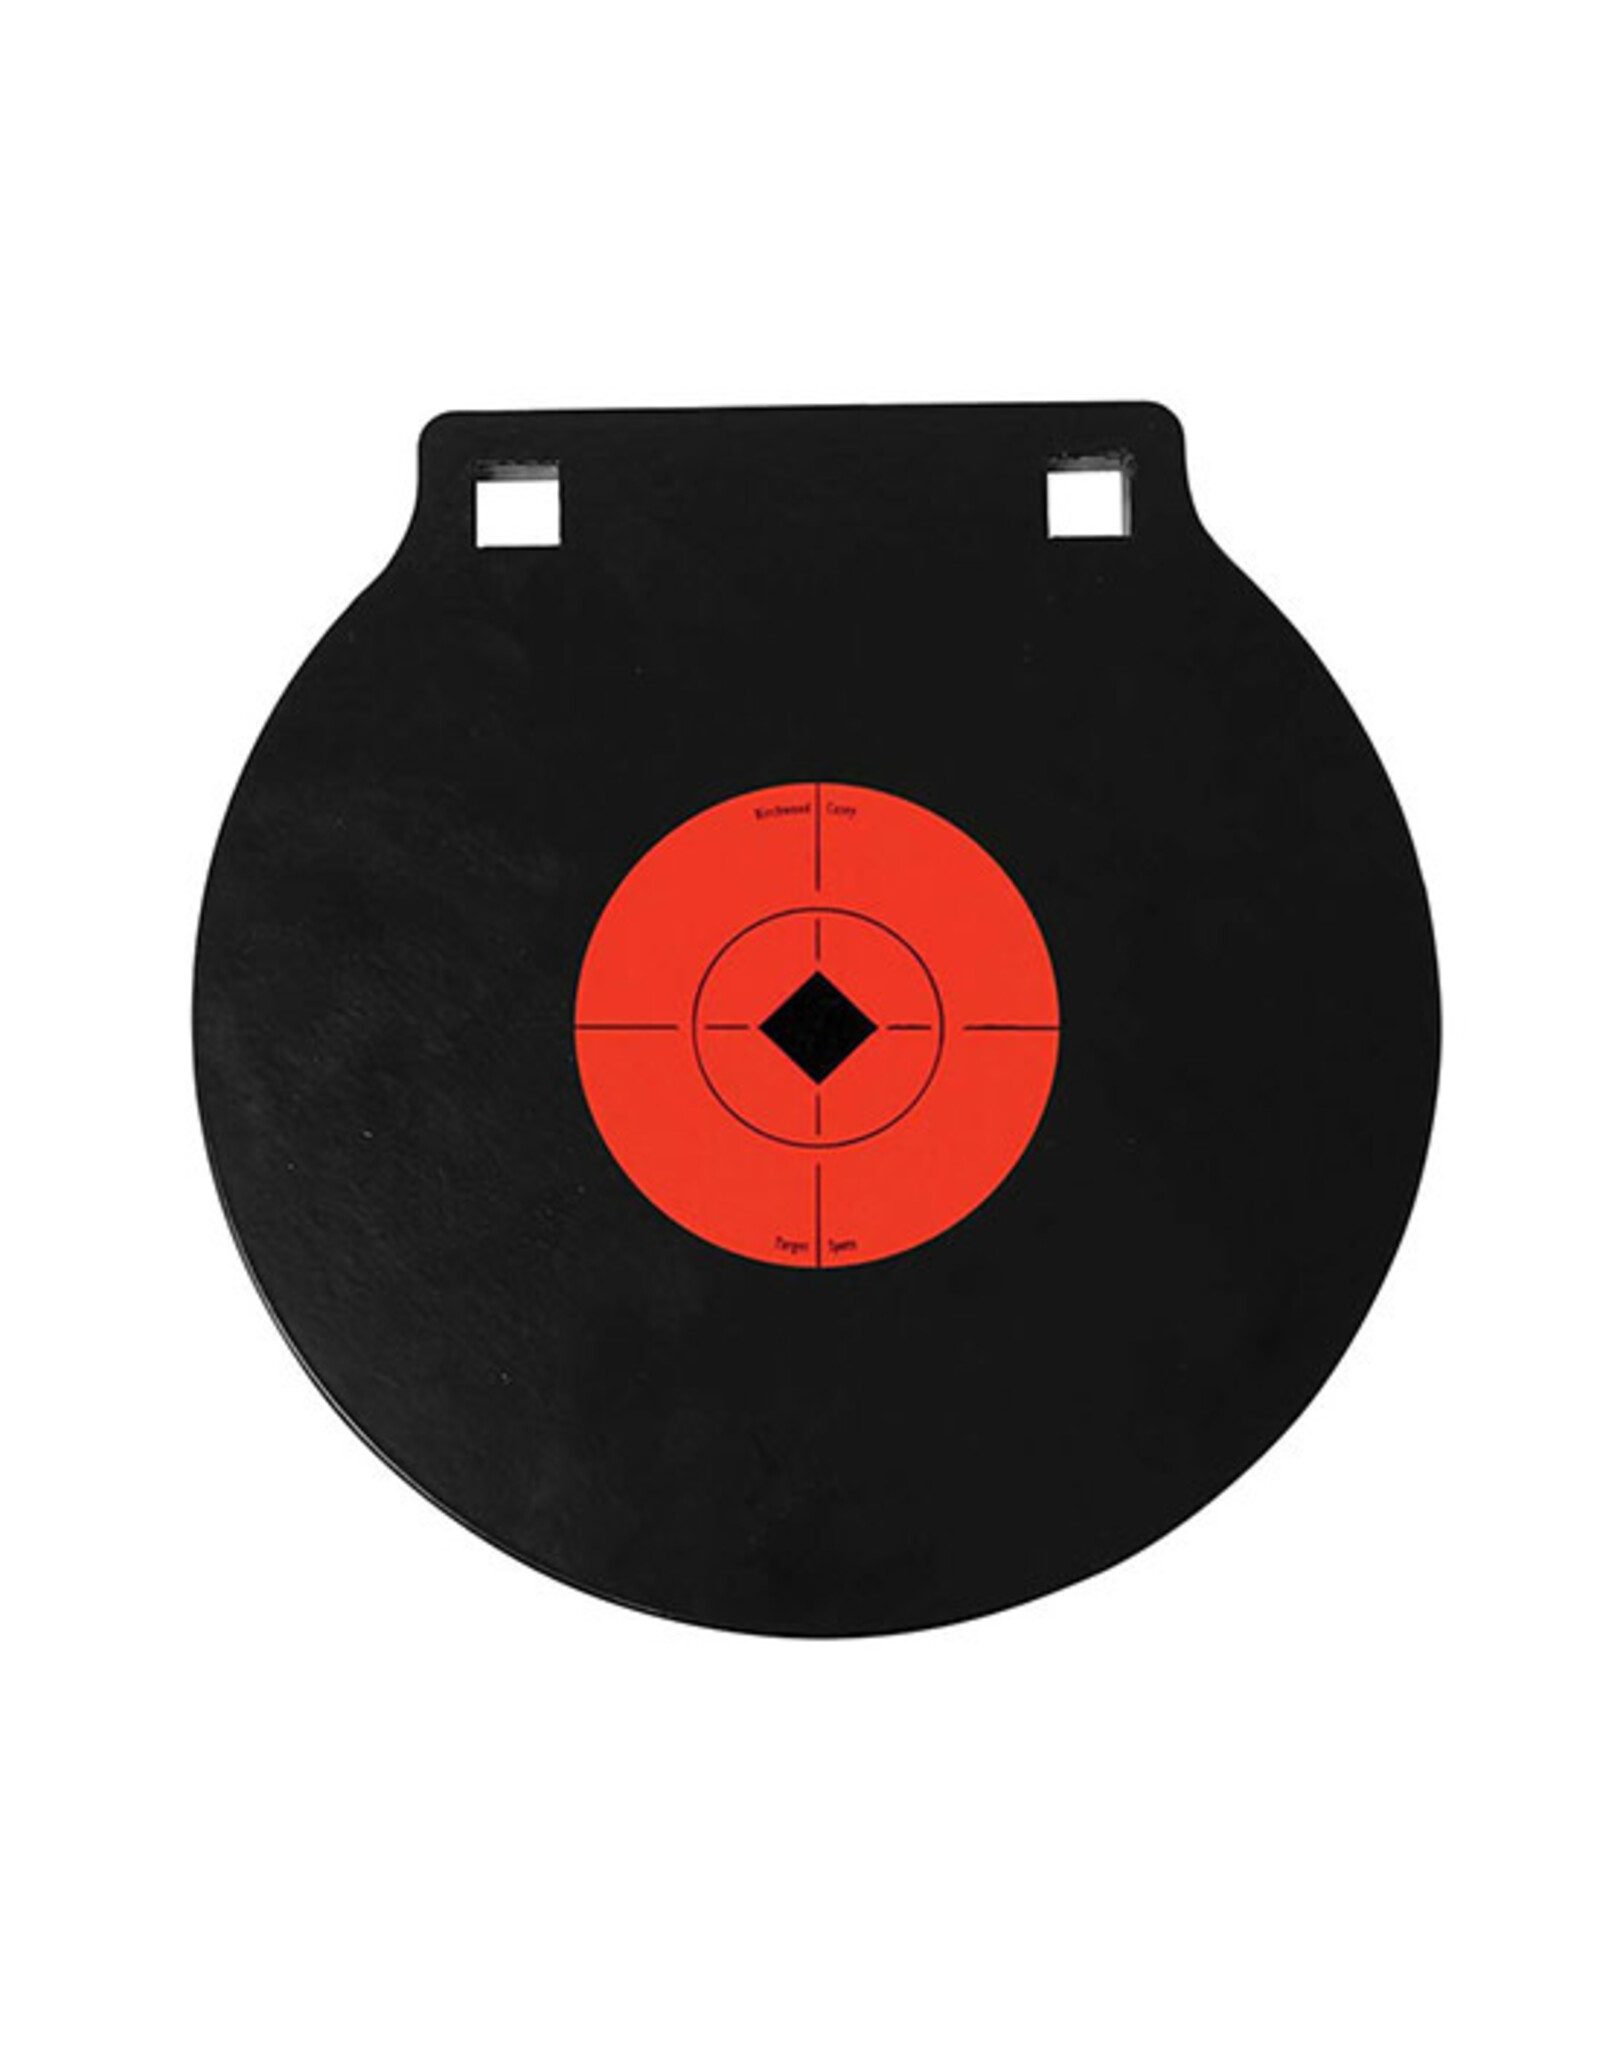 Birchwood Casey - 10 " - AR500 Gong Target